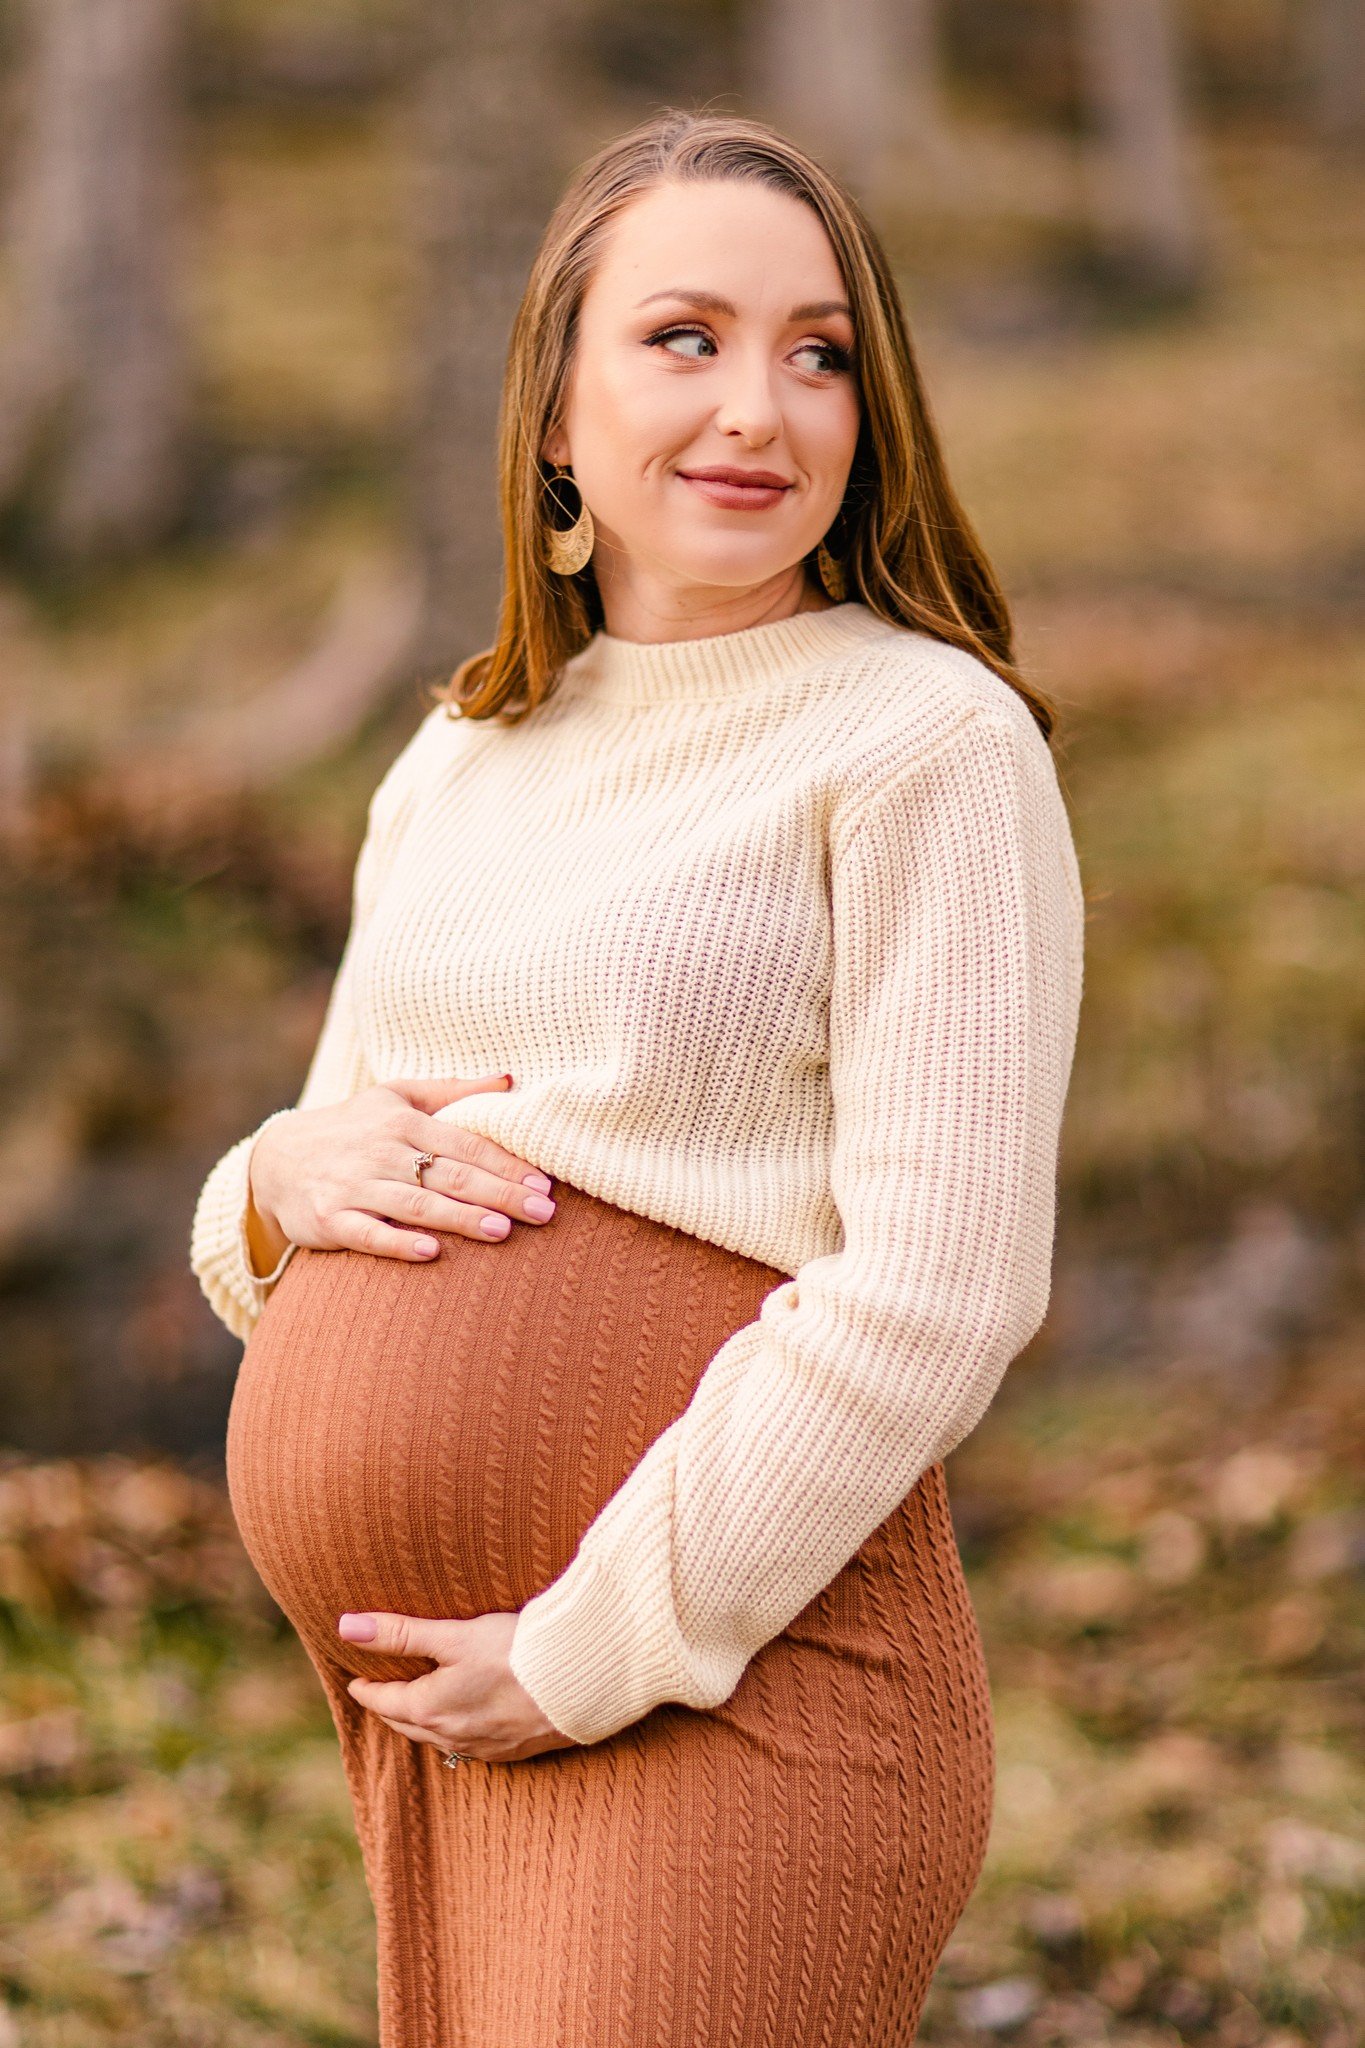 tazewell-va-maternity-photos-15.jpg